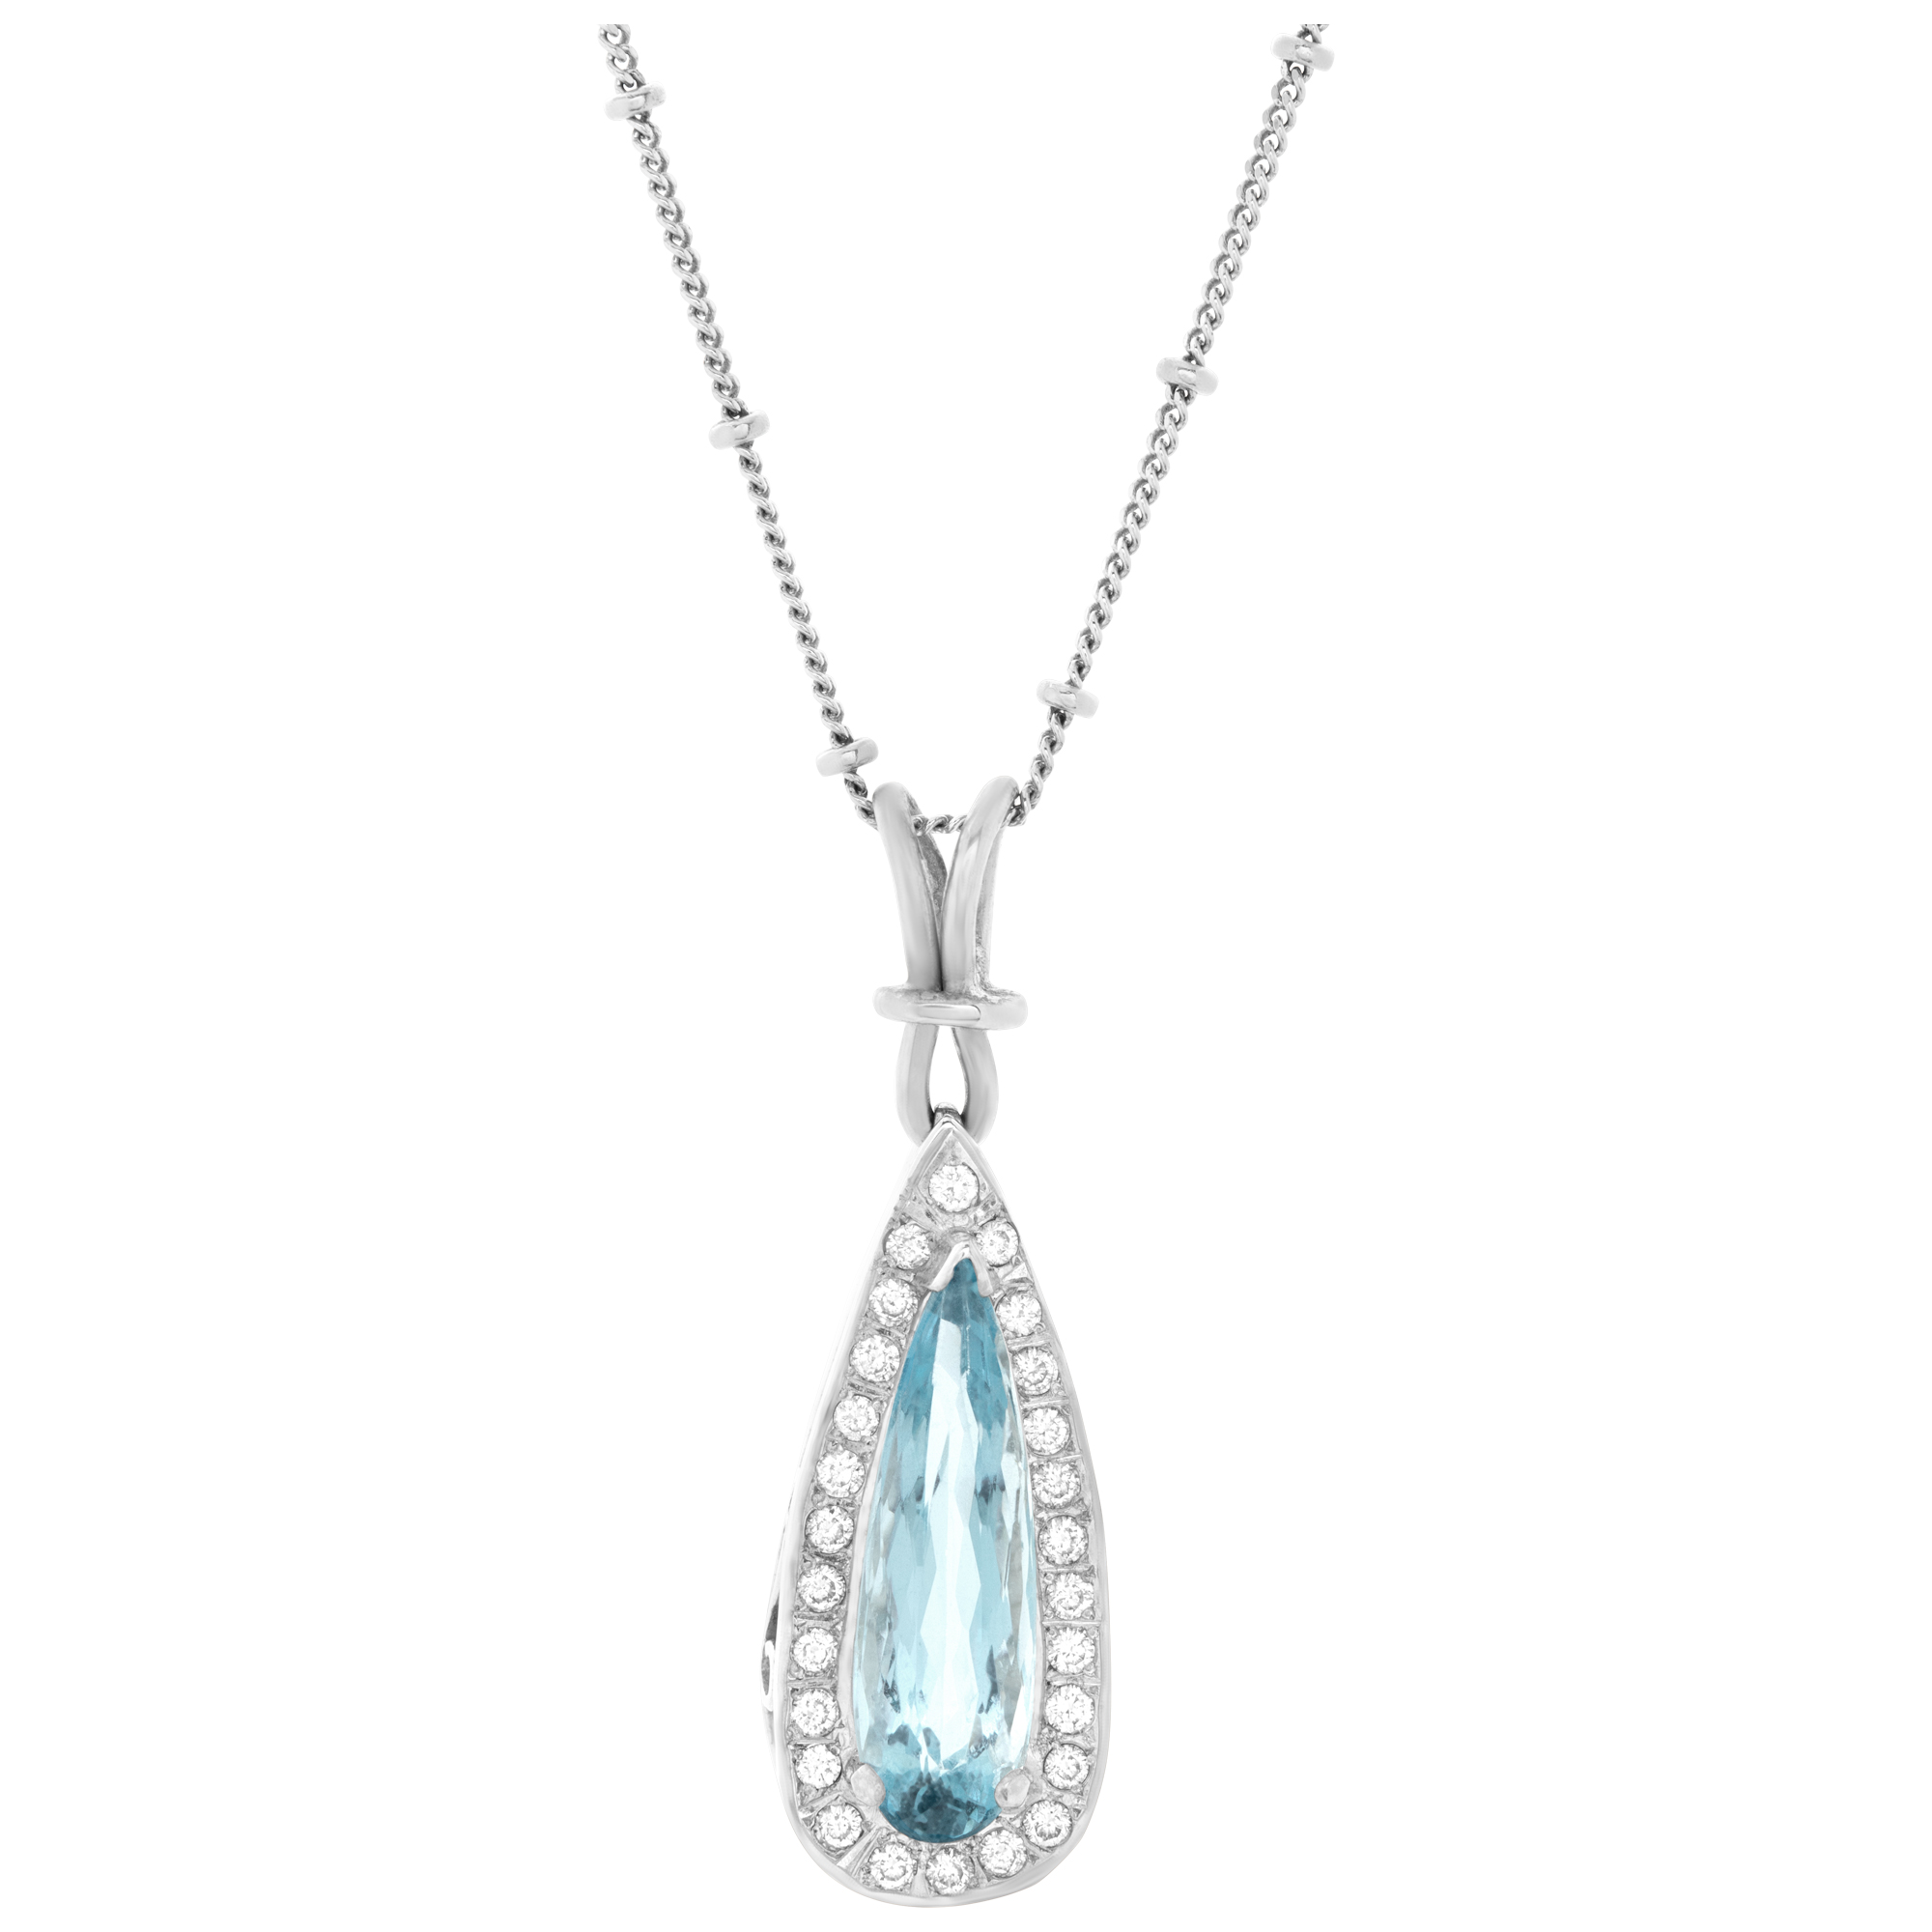 Brilliant cut pear shape blue topaz & diamonds pendant with 14k white gold chain.